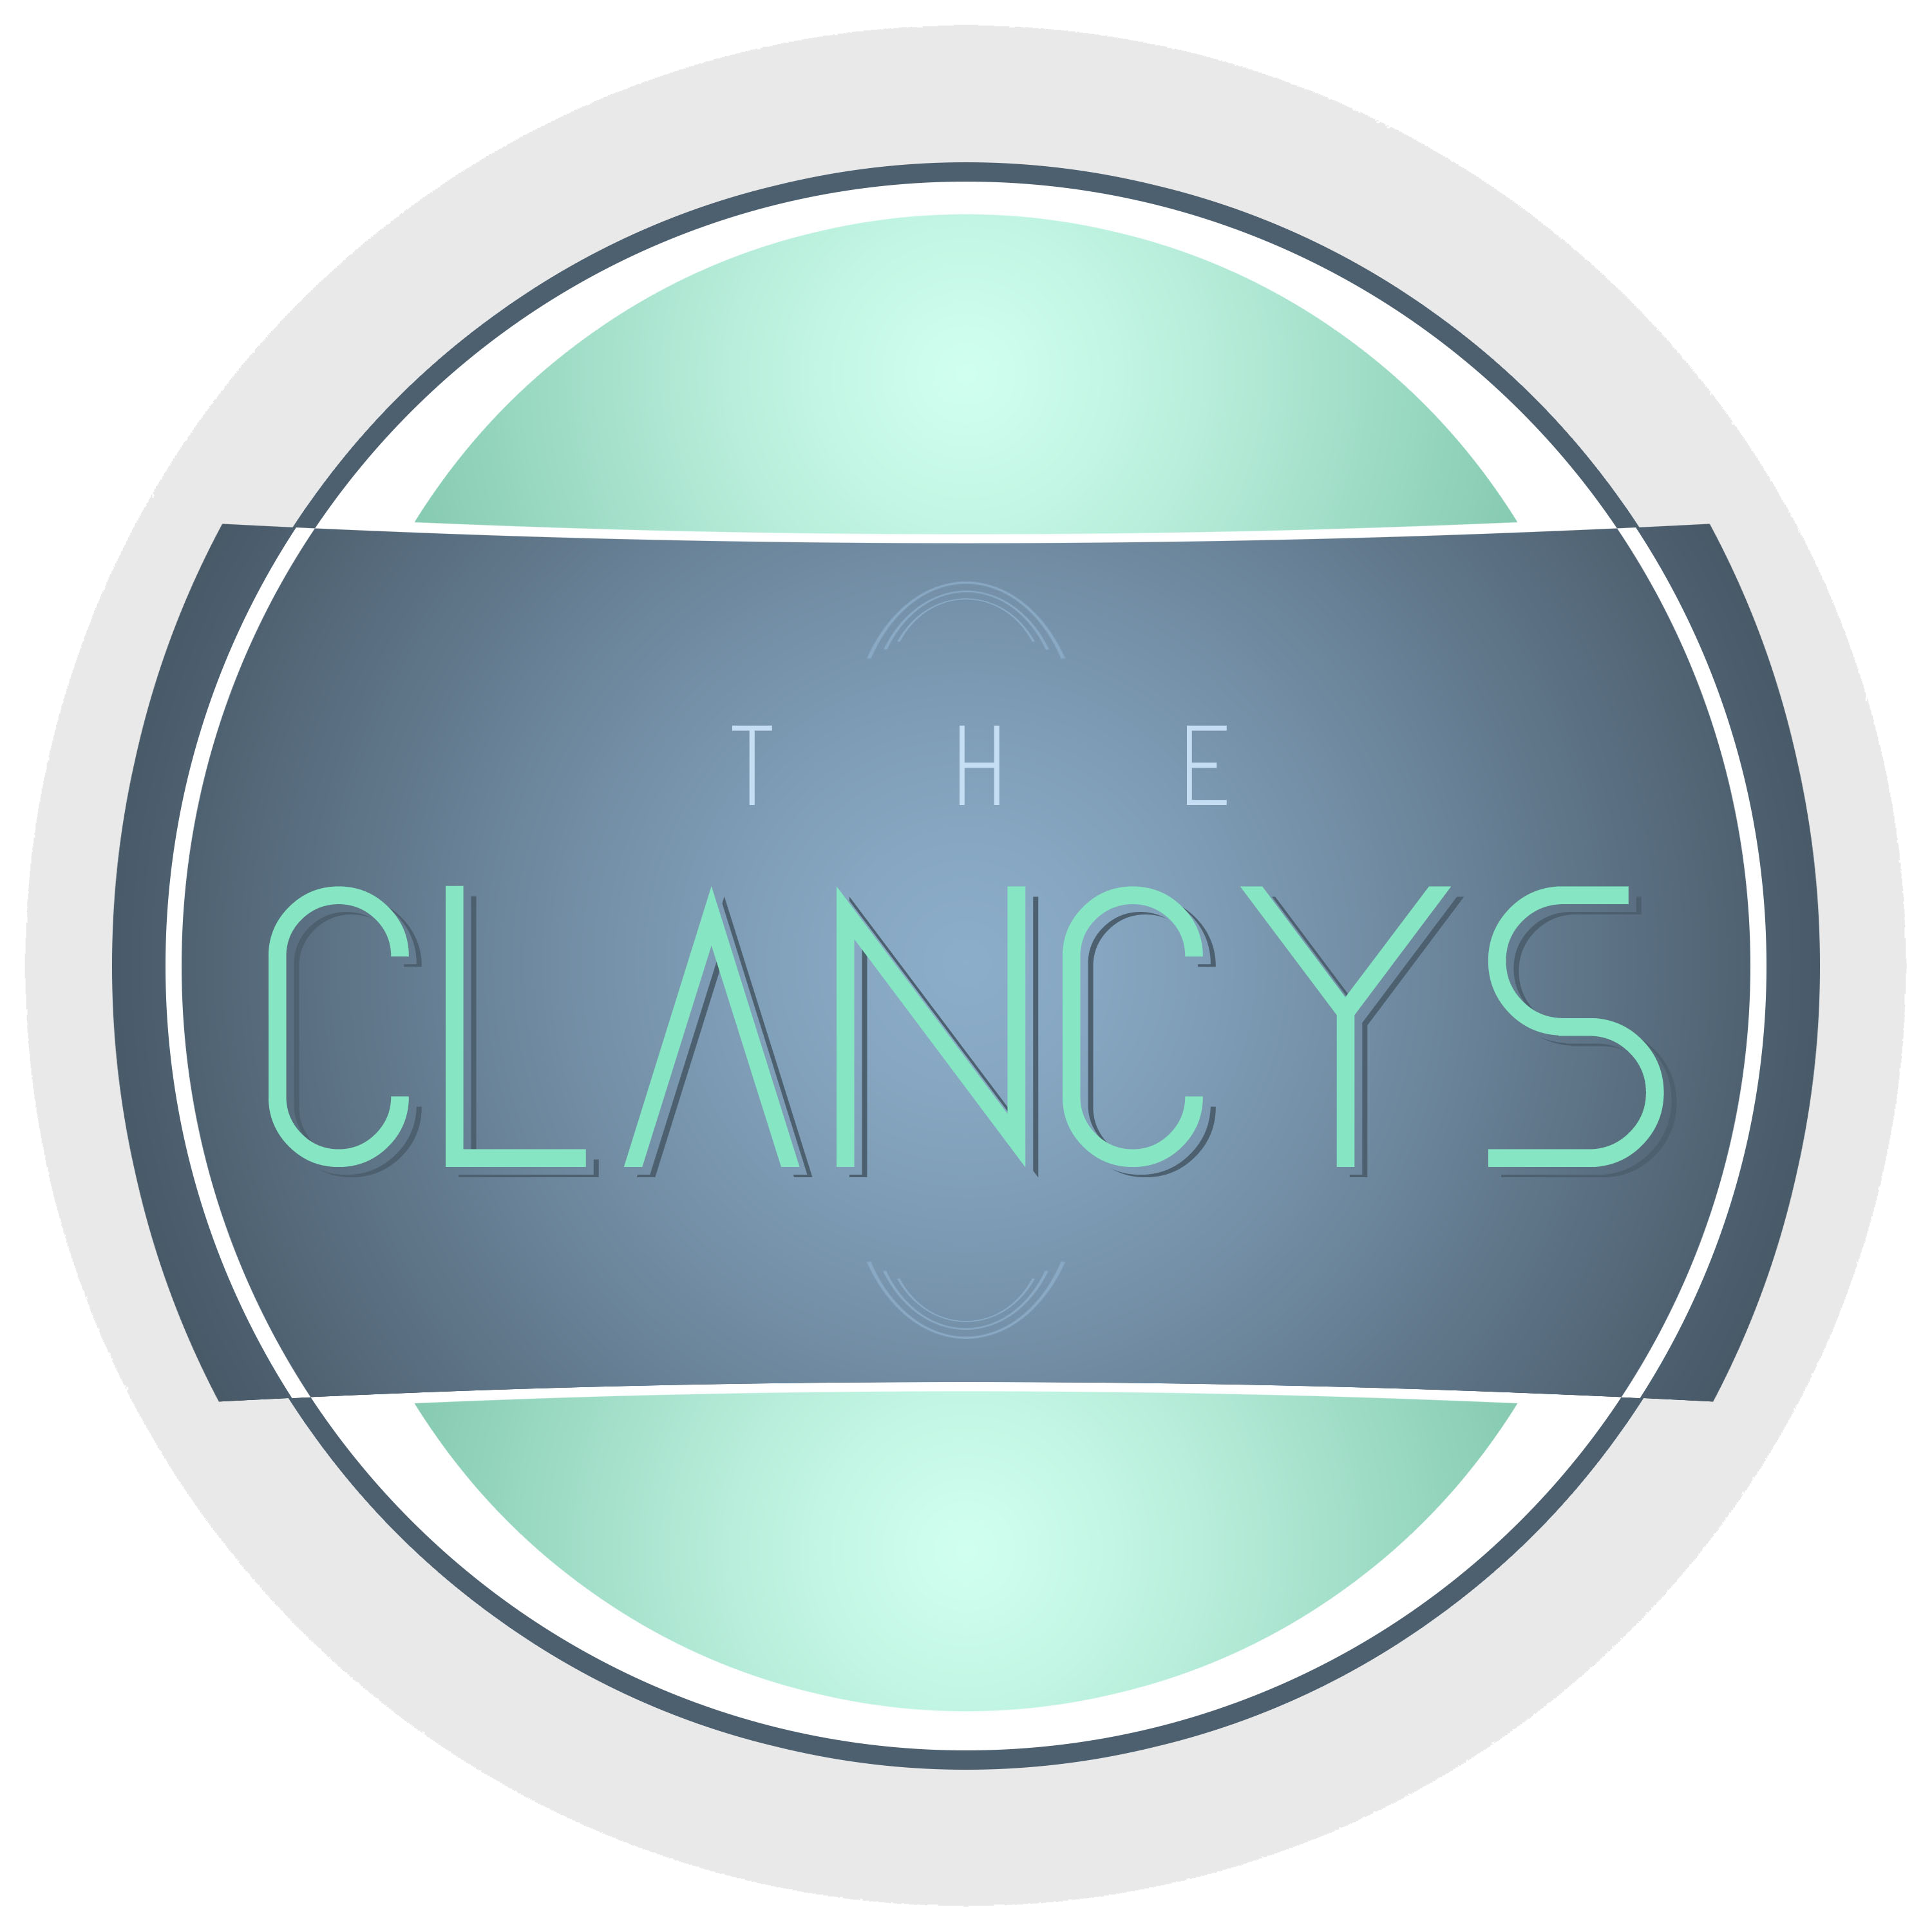 The Clancys